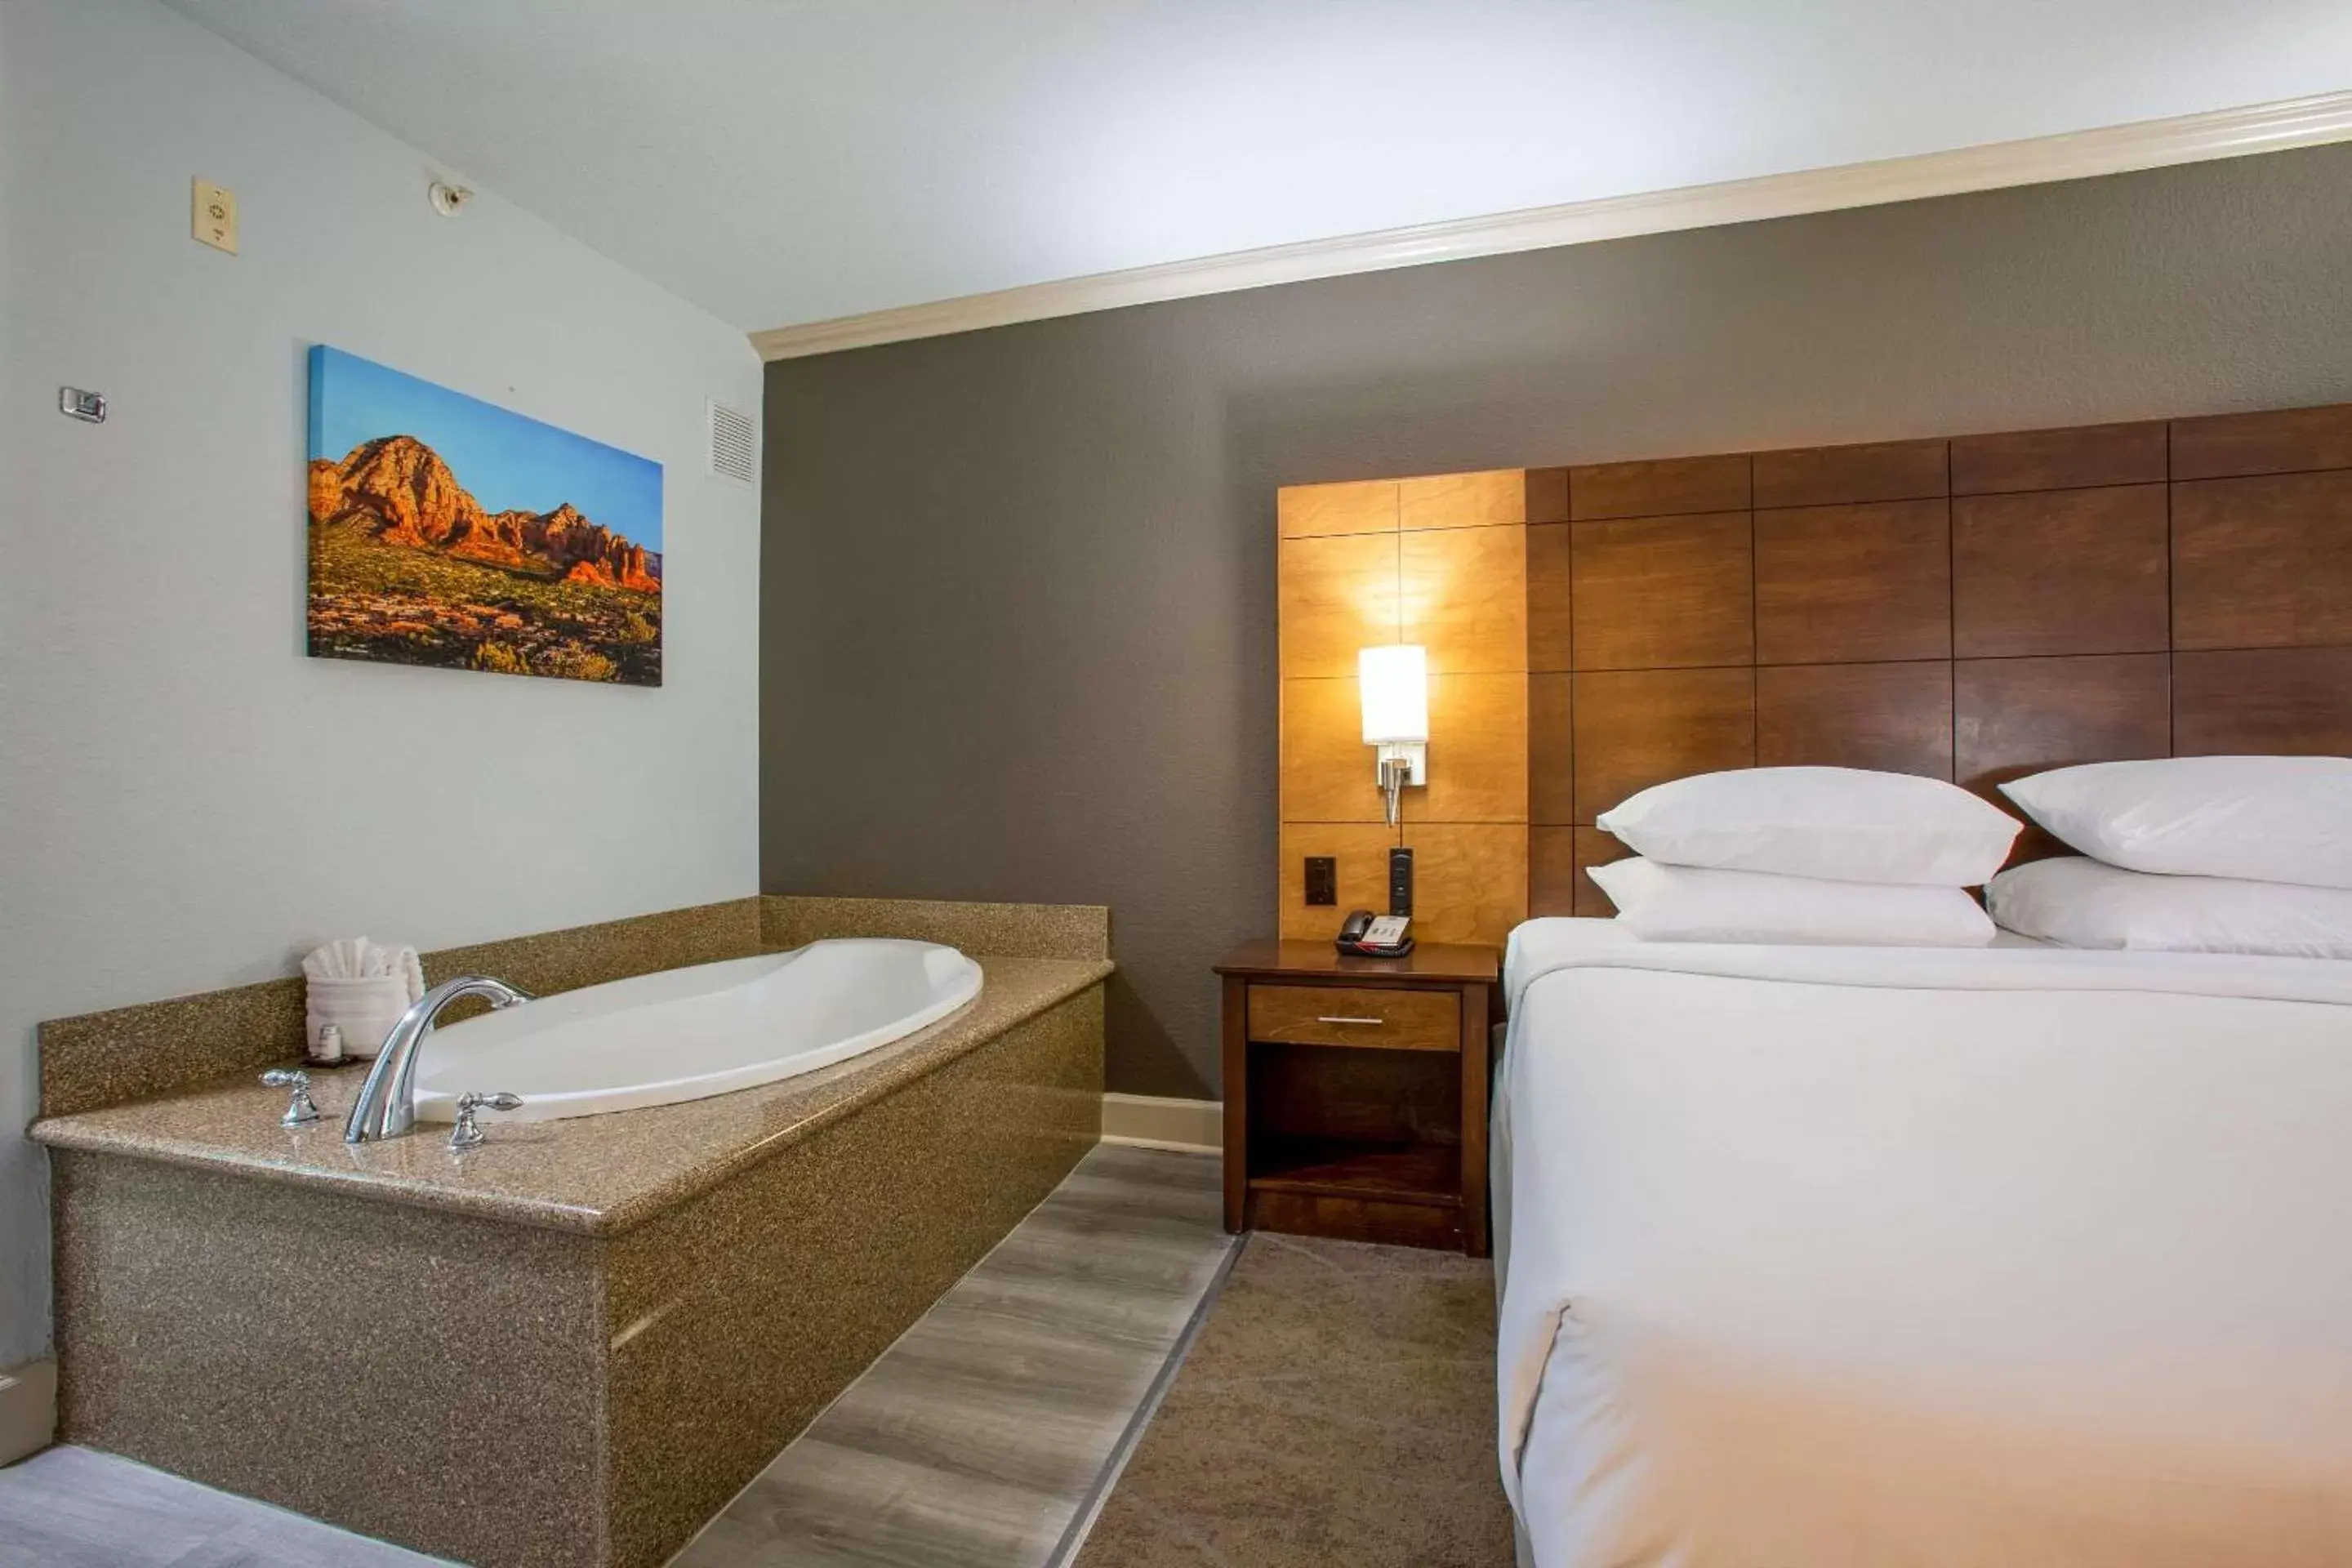 Bedroom, Bathroom in Arroyo Pinion Hotel, Ascend Hotel Collection